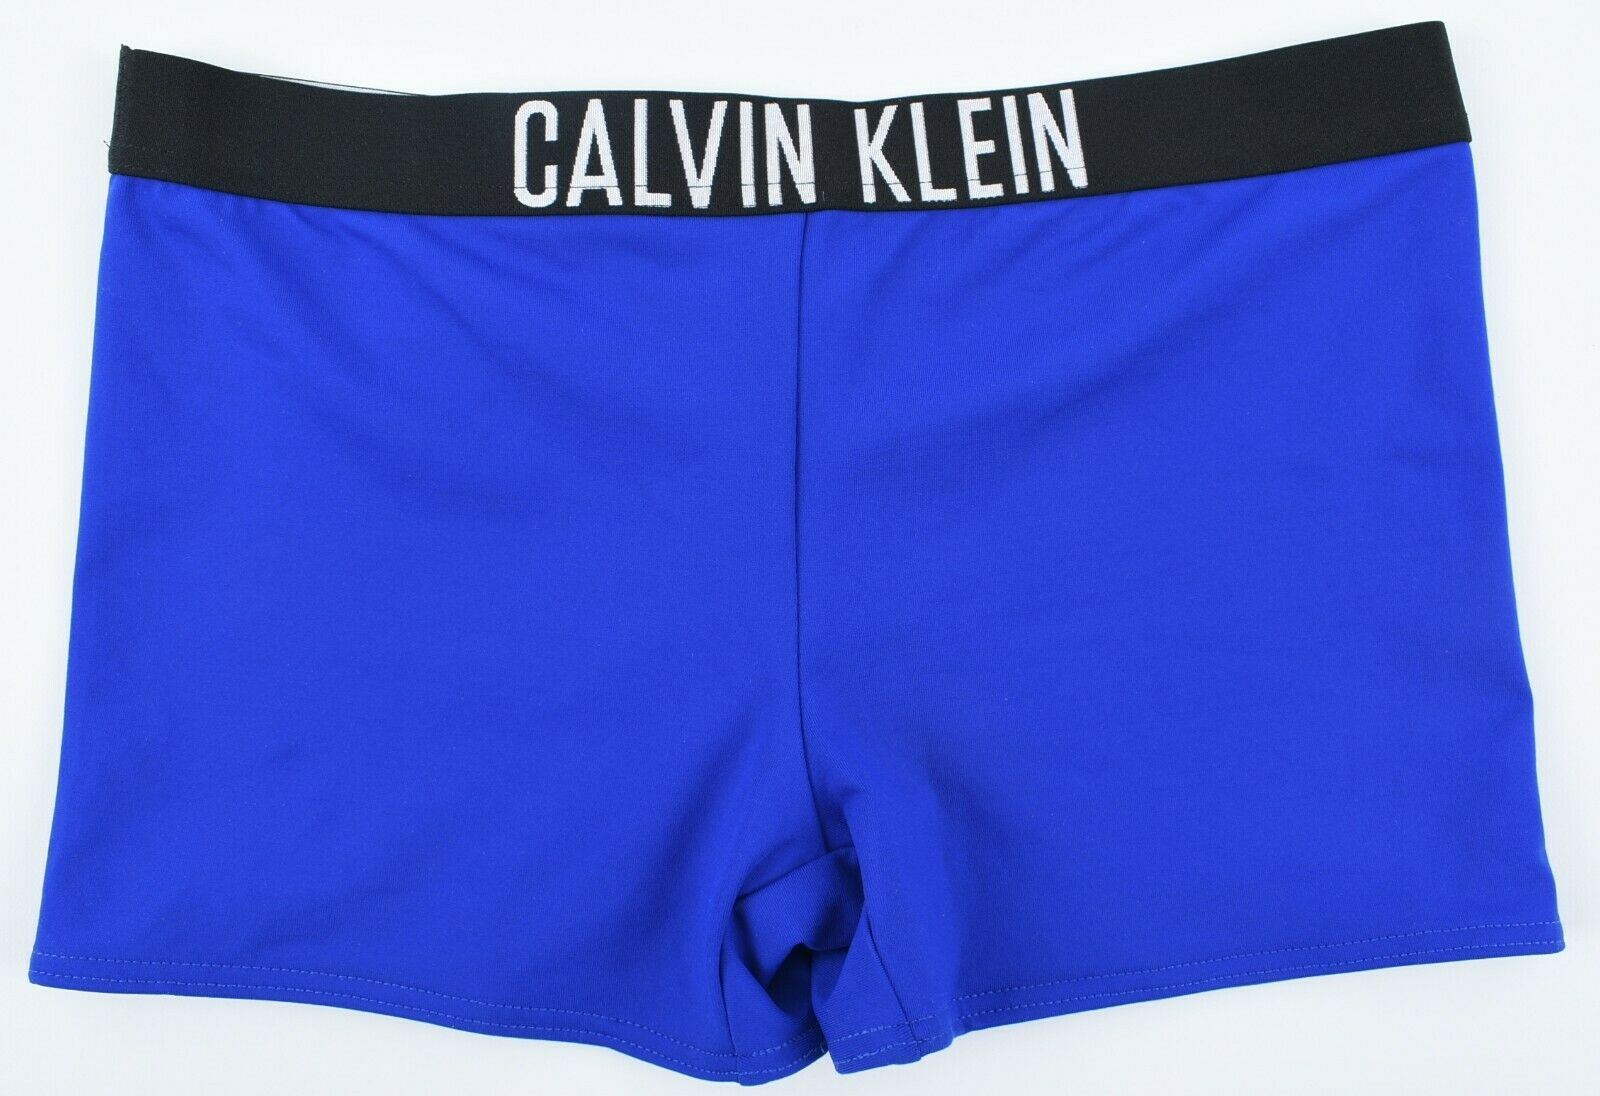 CALVIN KLEIN Swimwear: Boys Kids Intense Power Trunks, Blue, 14-16 years